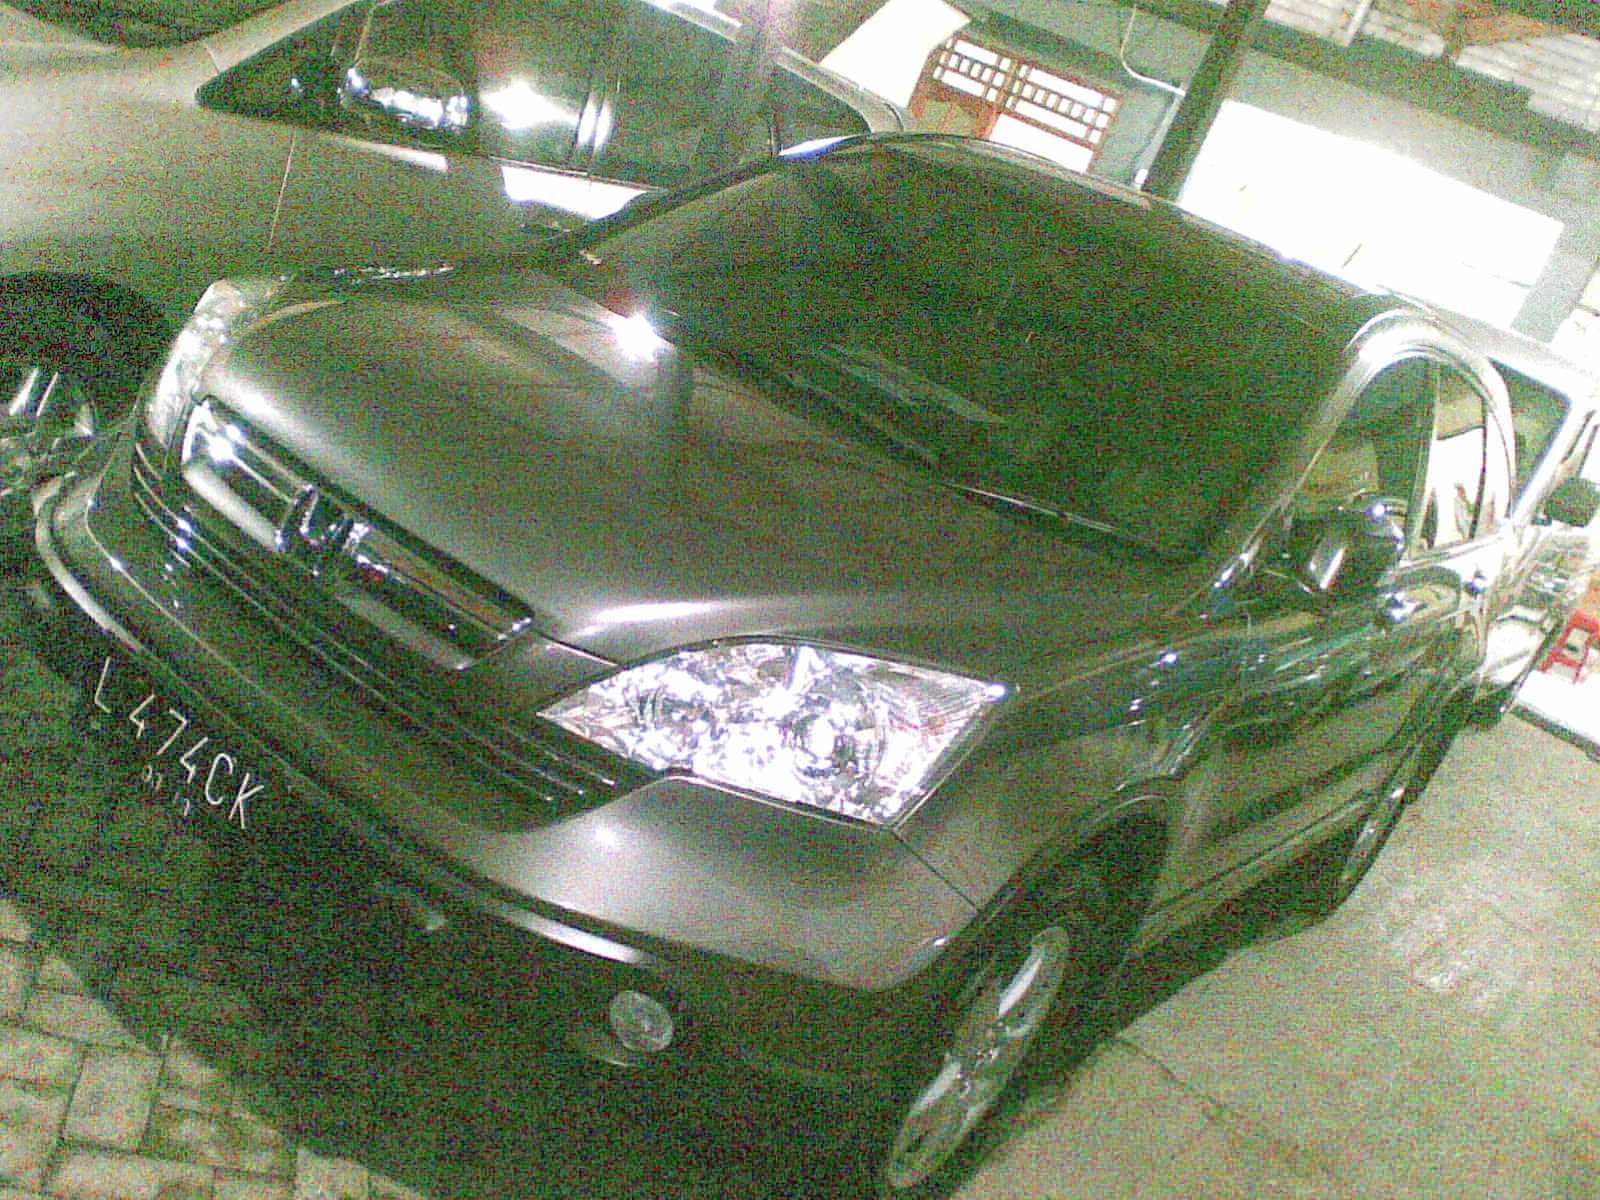  Jual  Beli Mobil  Bekas Honda  Crv  Surabaya